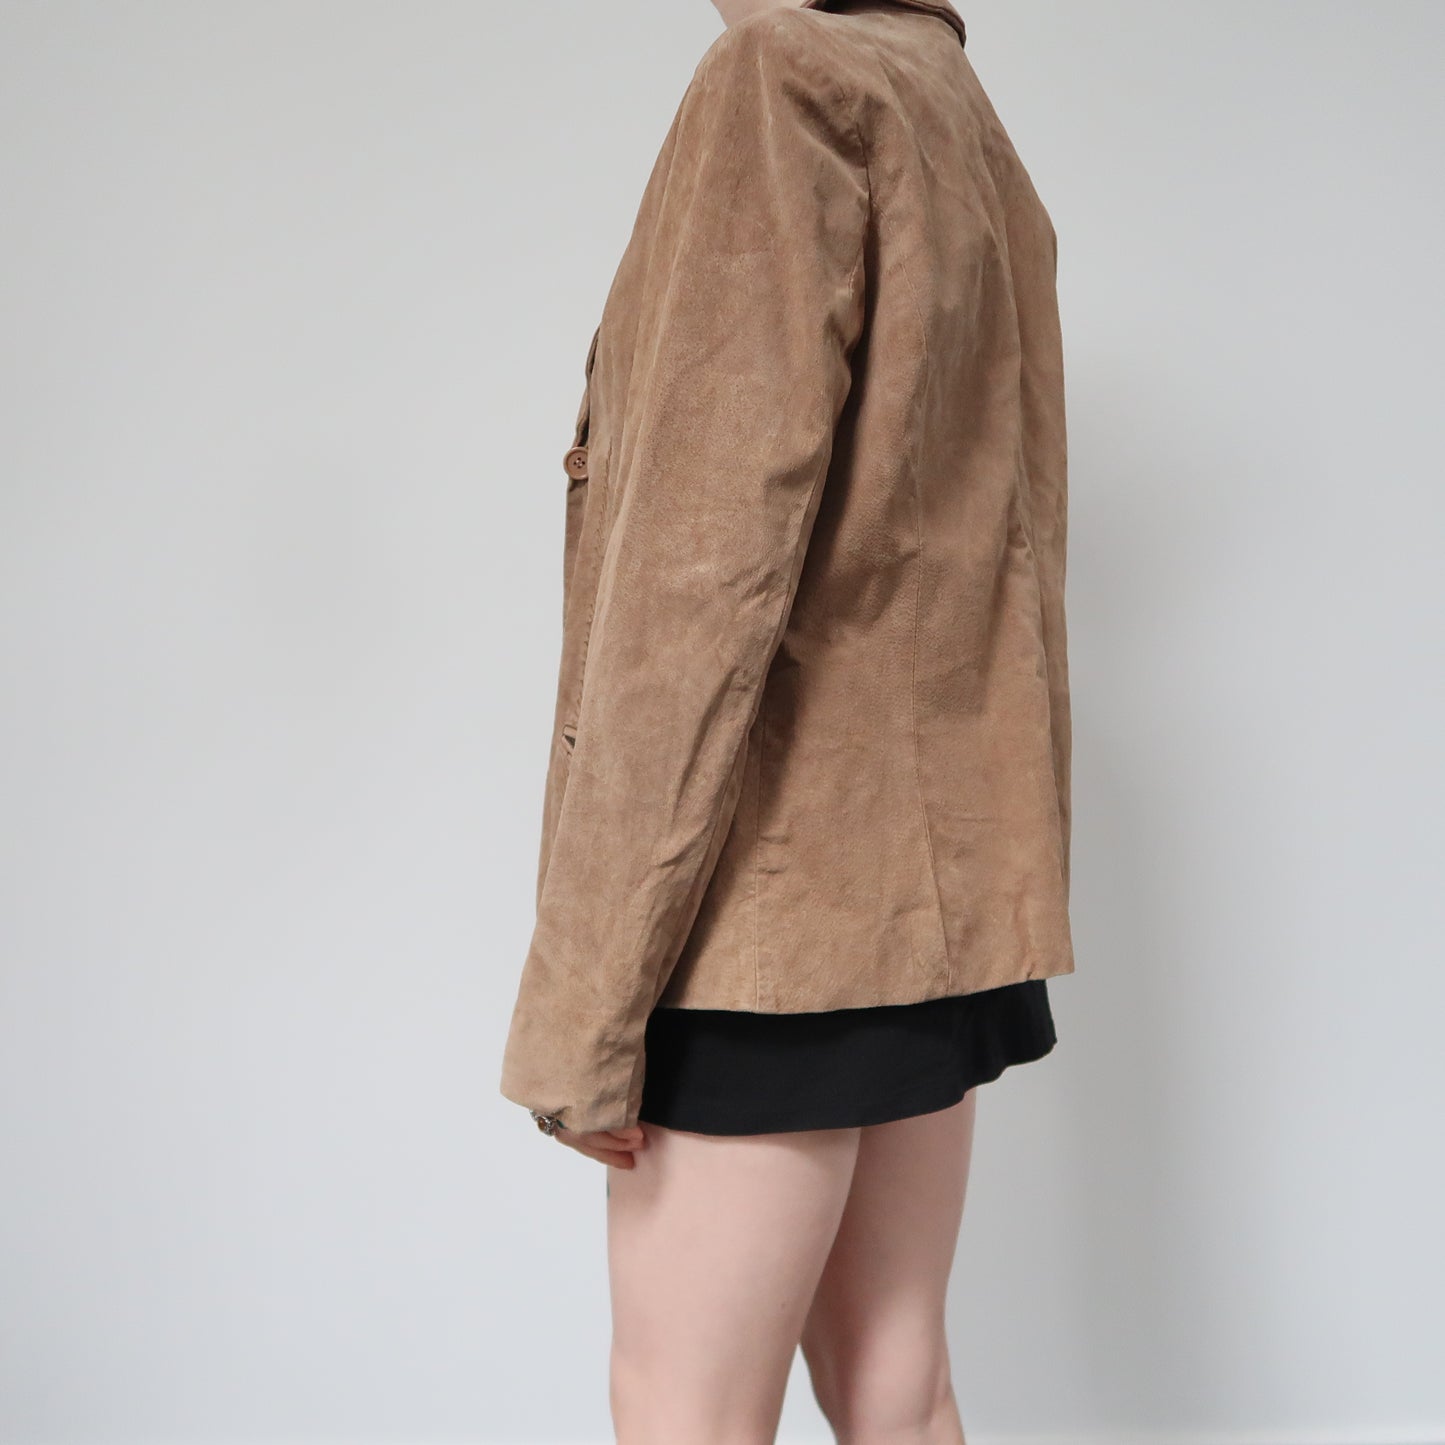 Tan suede jacket - size S/M